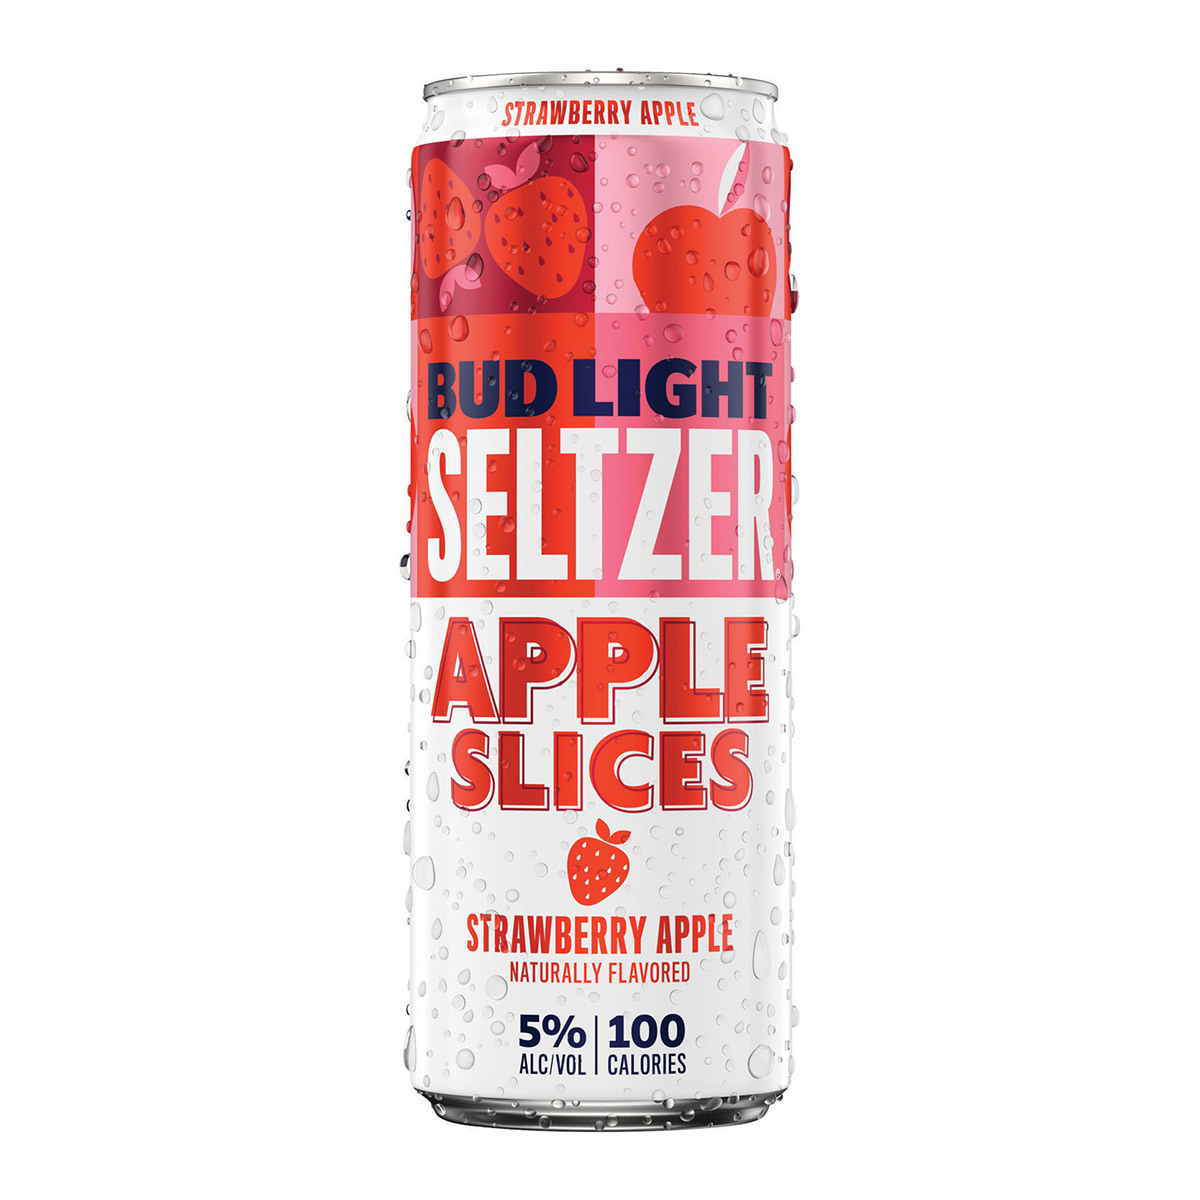 Apple Slices: Strawberry Apple